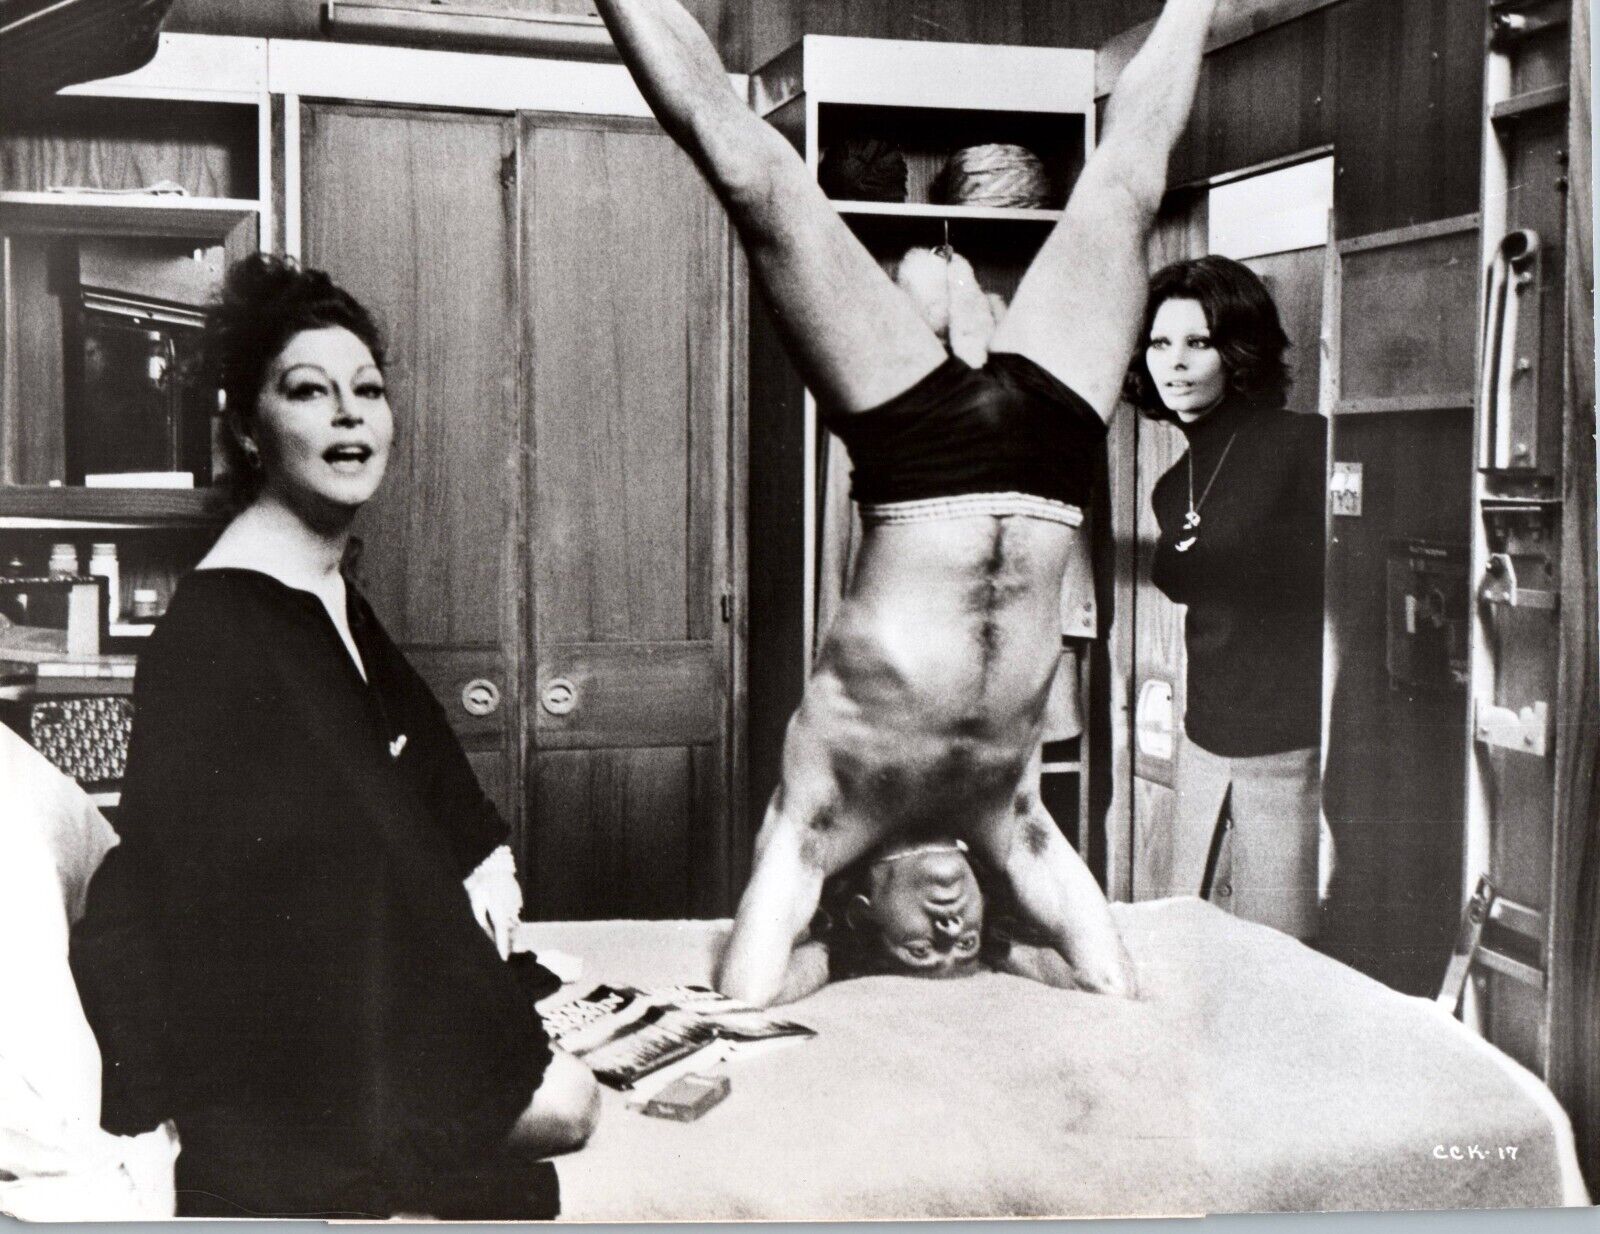 Martin Sheen + Ava Gardner + Sophia Loren Cassandra Crossing (1976) Photo K 352